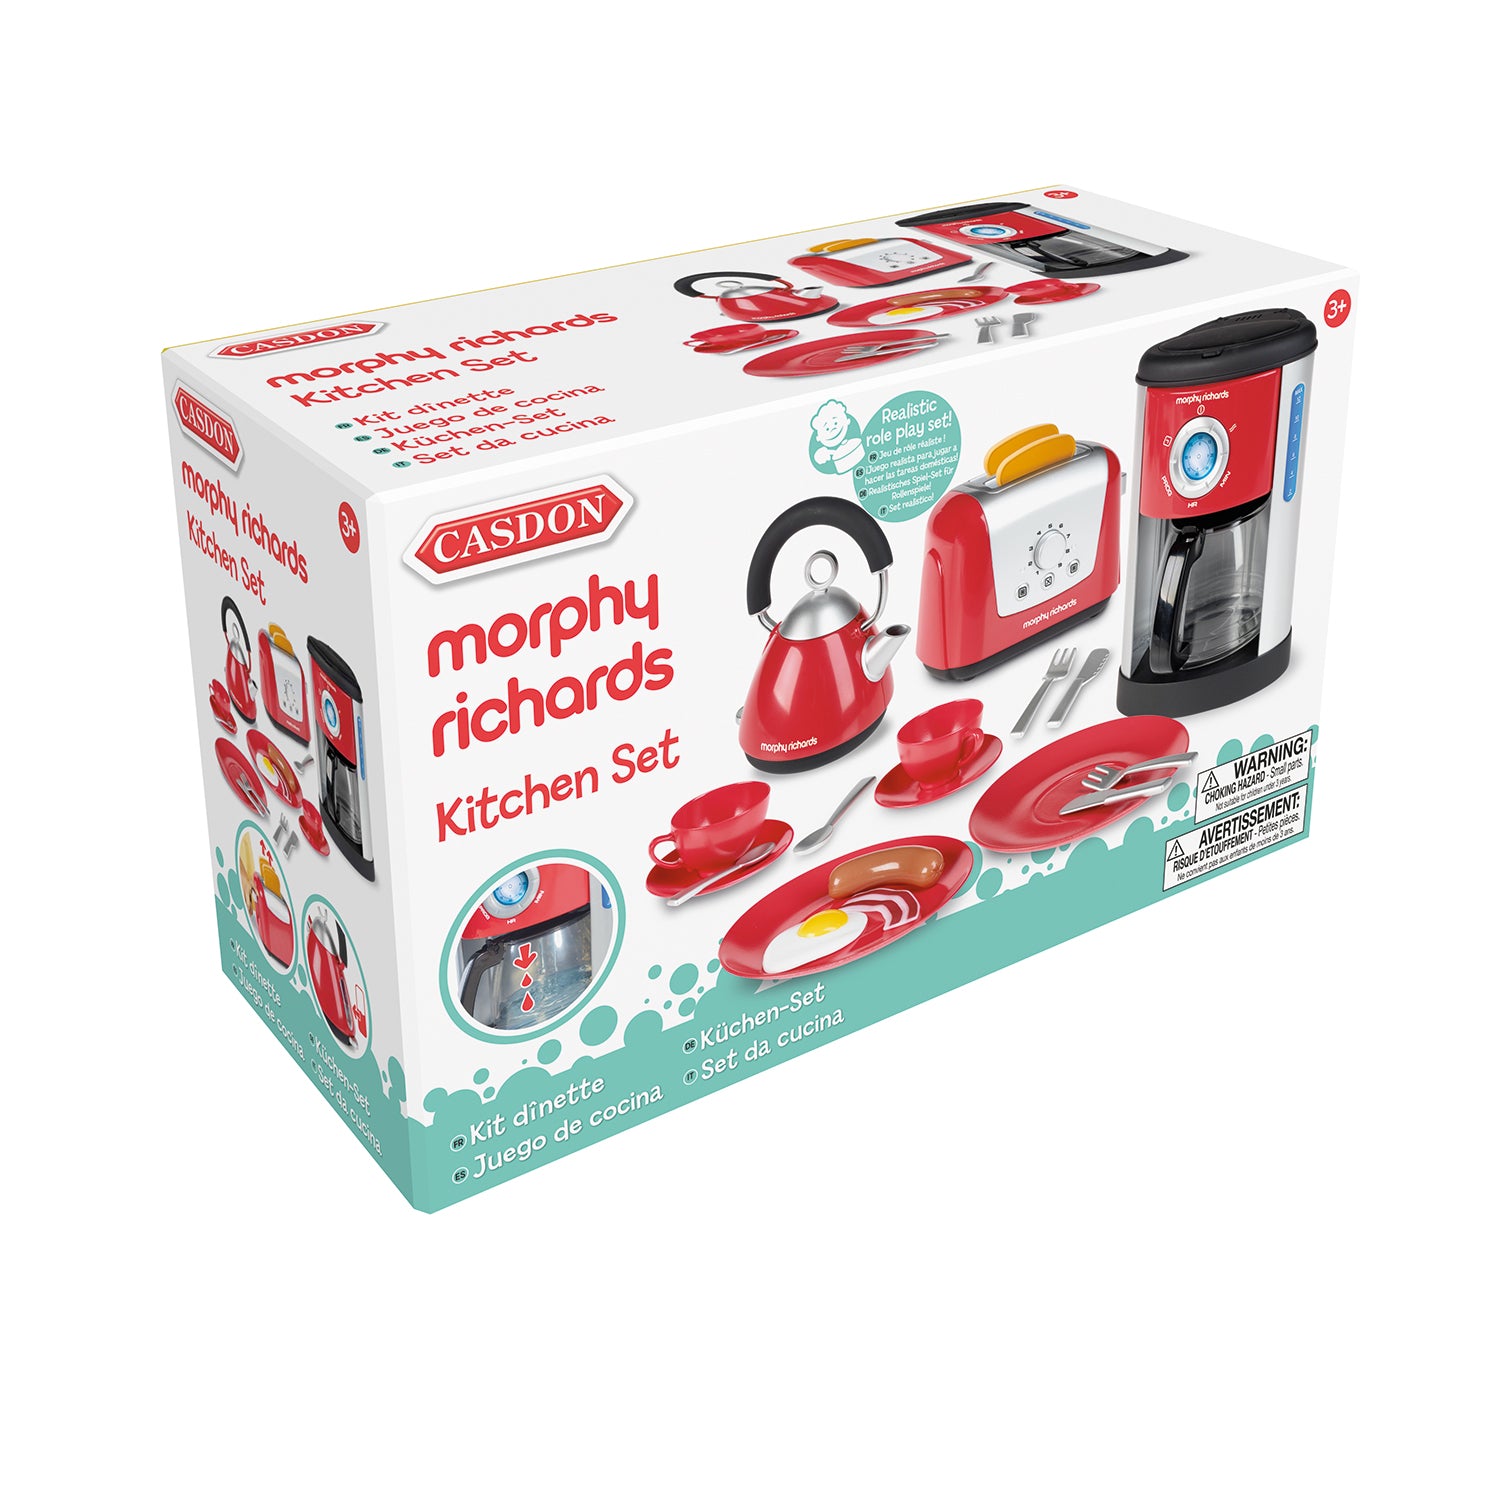 Casdon - Morphy Richards Kitchen Set Toy